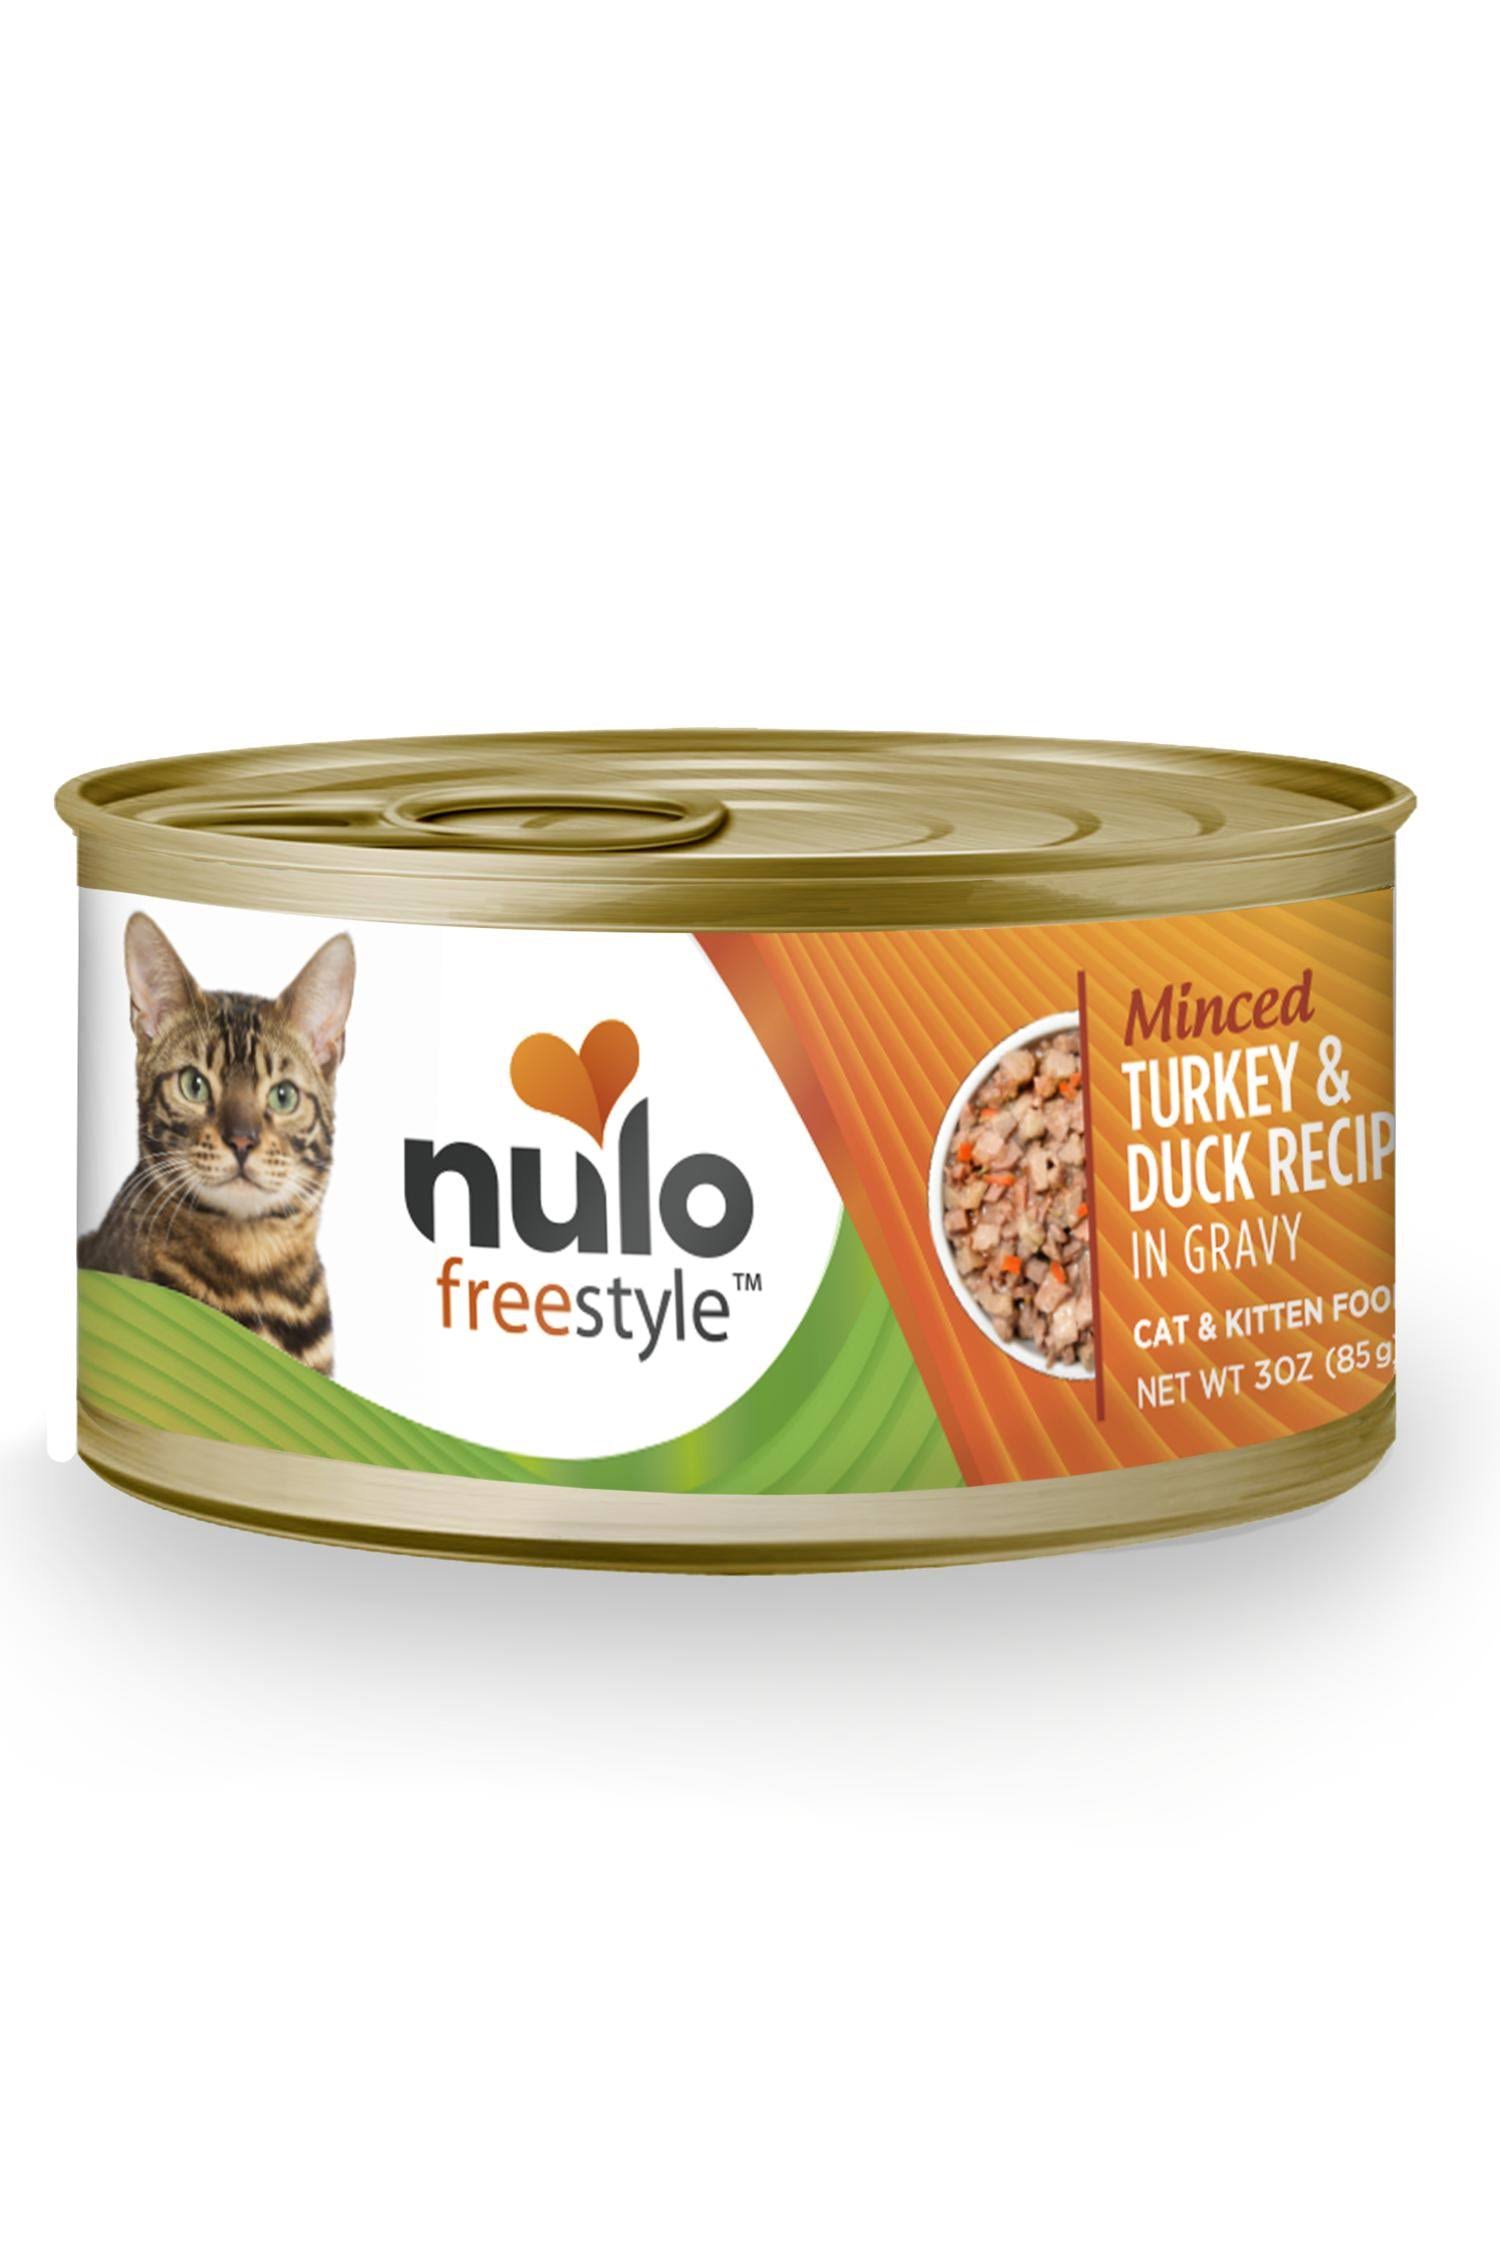 Nulo Freestyle Grain-Free Minced Turkey & Duck Recipe in Gravy Canned Cat Food